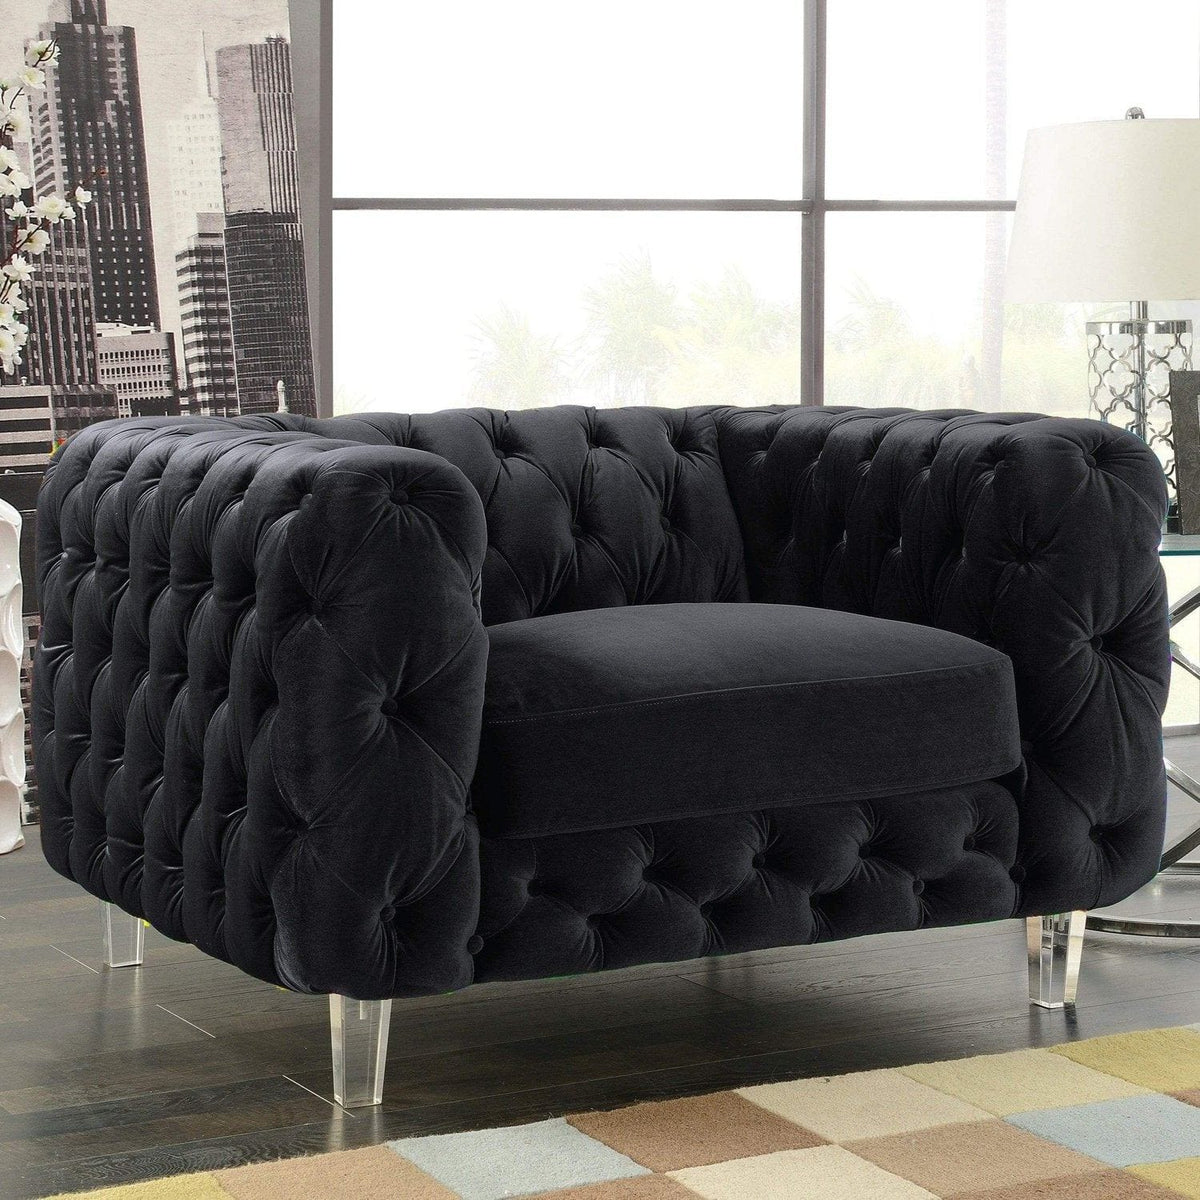 Iconic Home Syracus Plush Tufted Velvet Club Chair Black